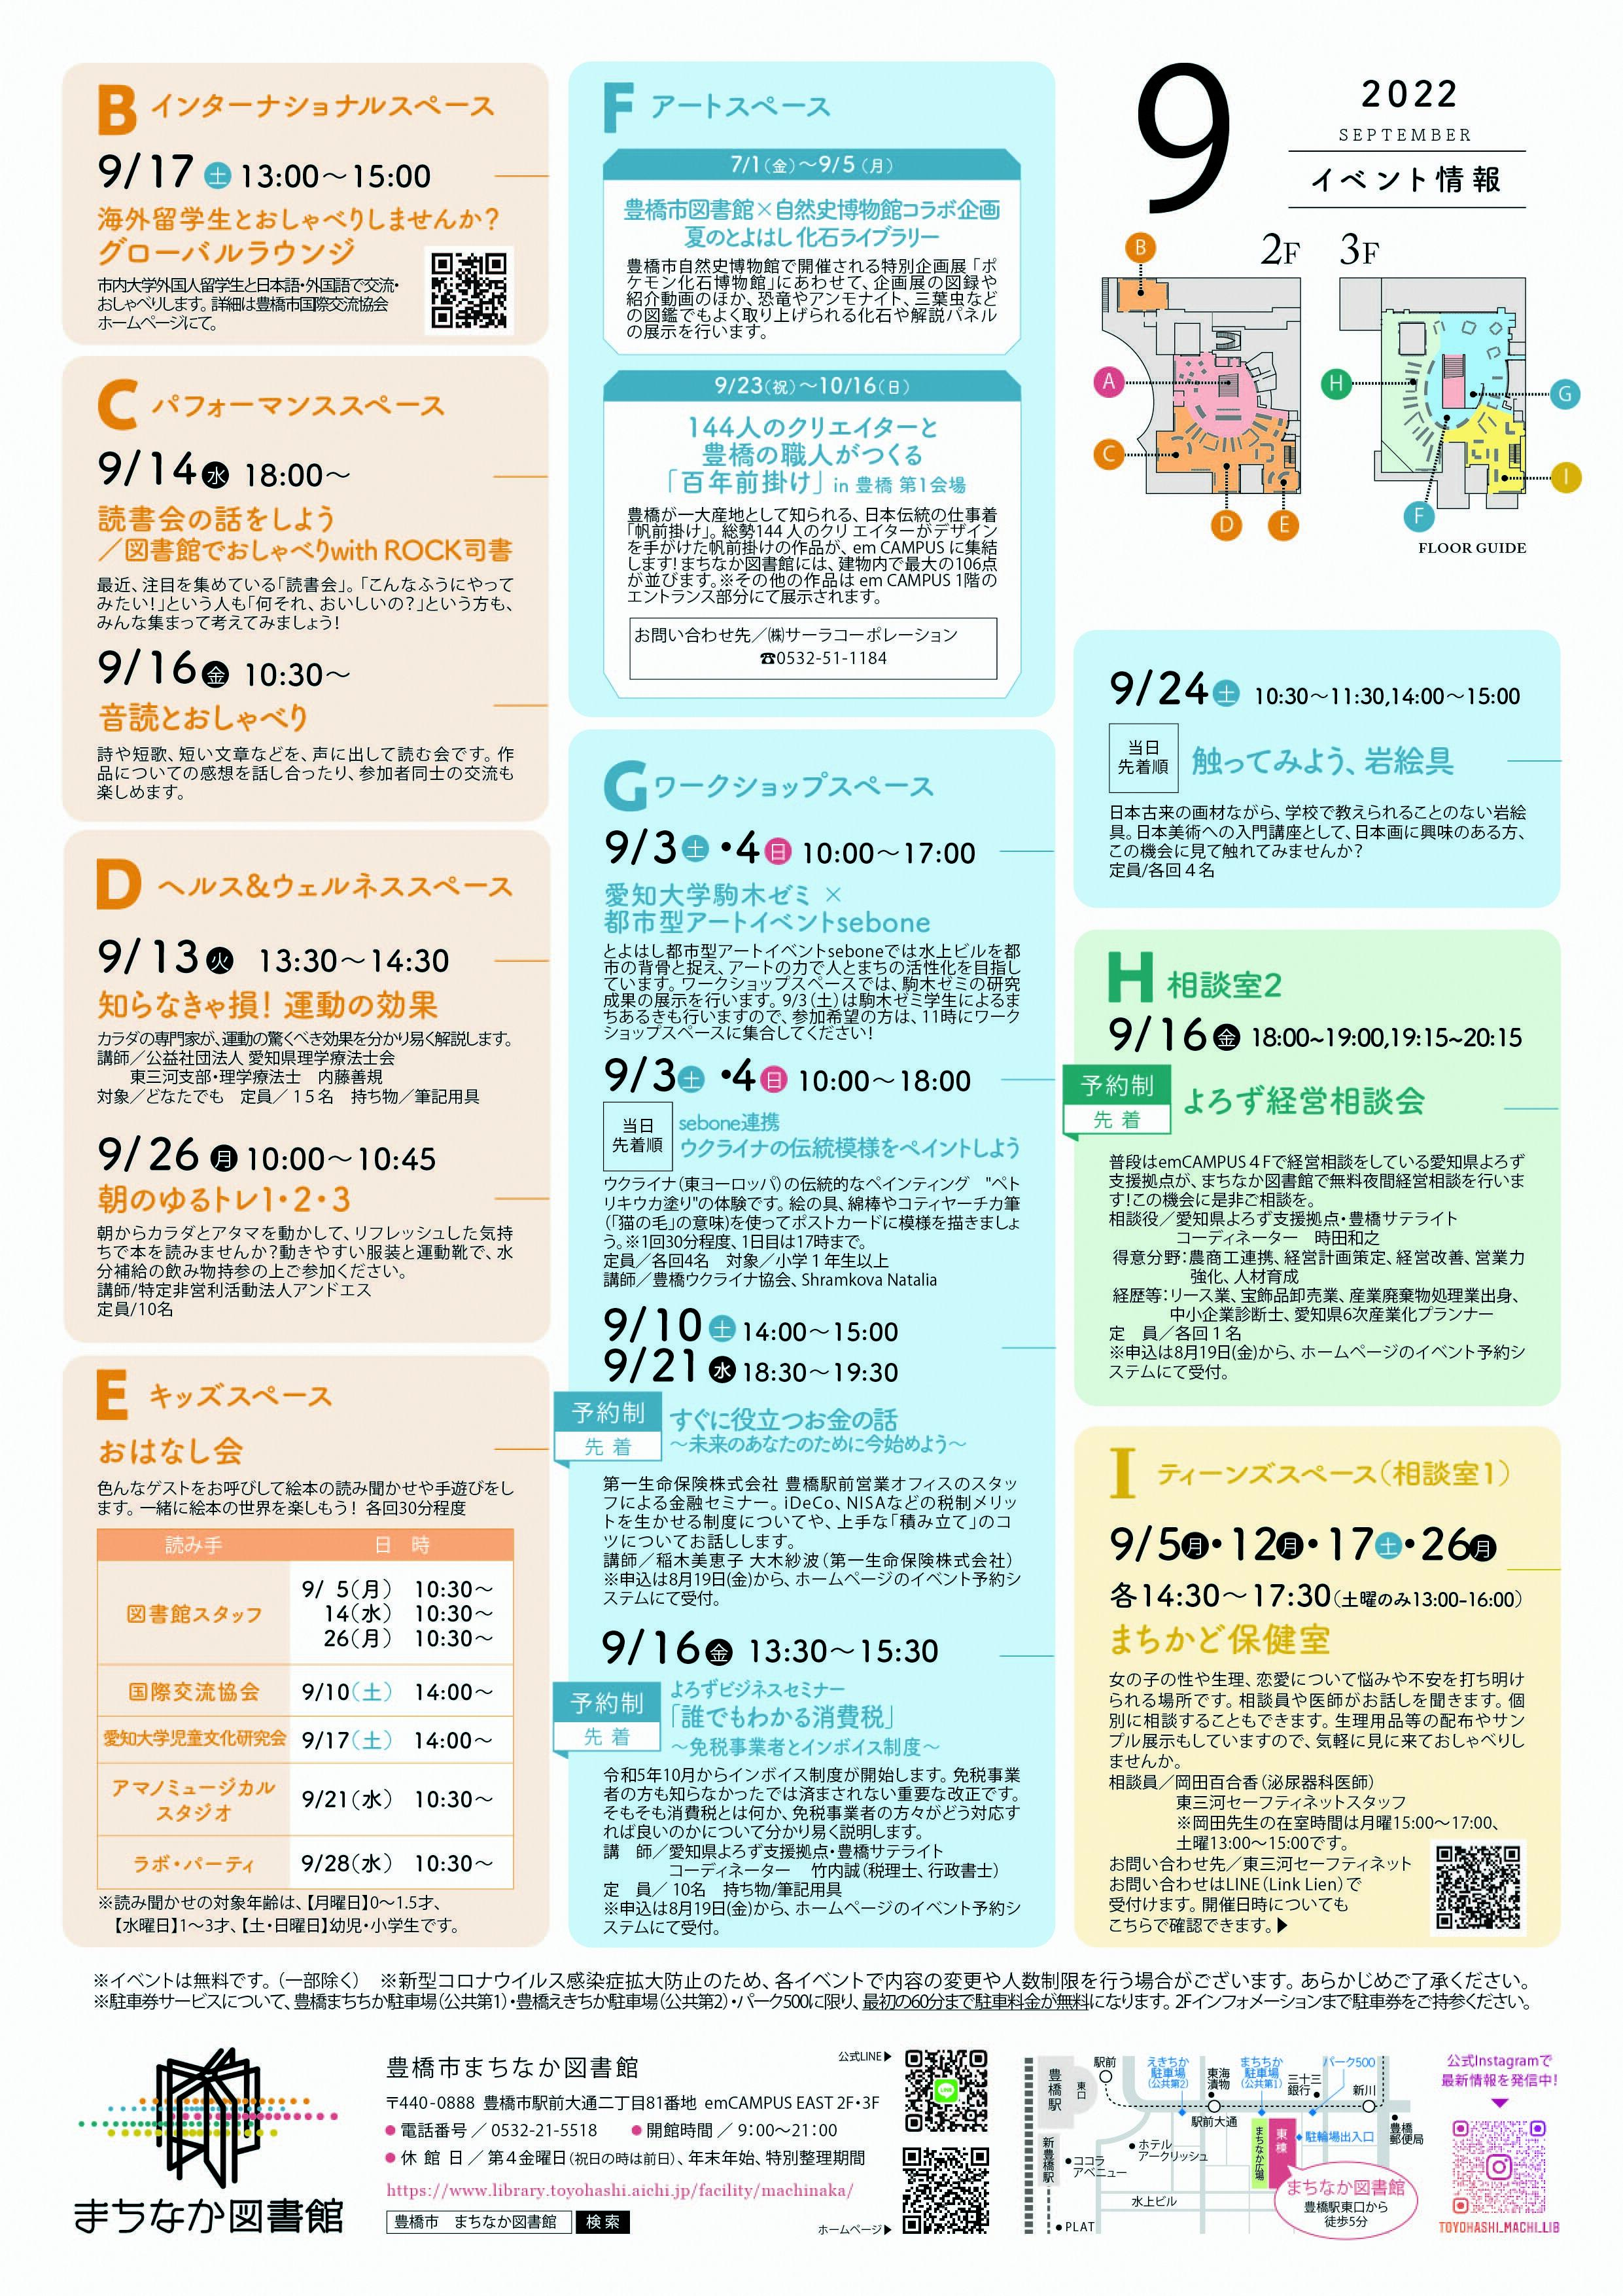 https://www.library.toyohashi.aichi.jp/facility/machinaka/event/bc822285f36197648d5c8882ec37b318.jpg